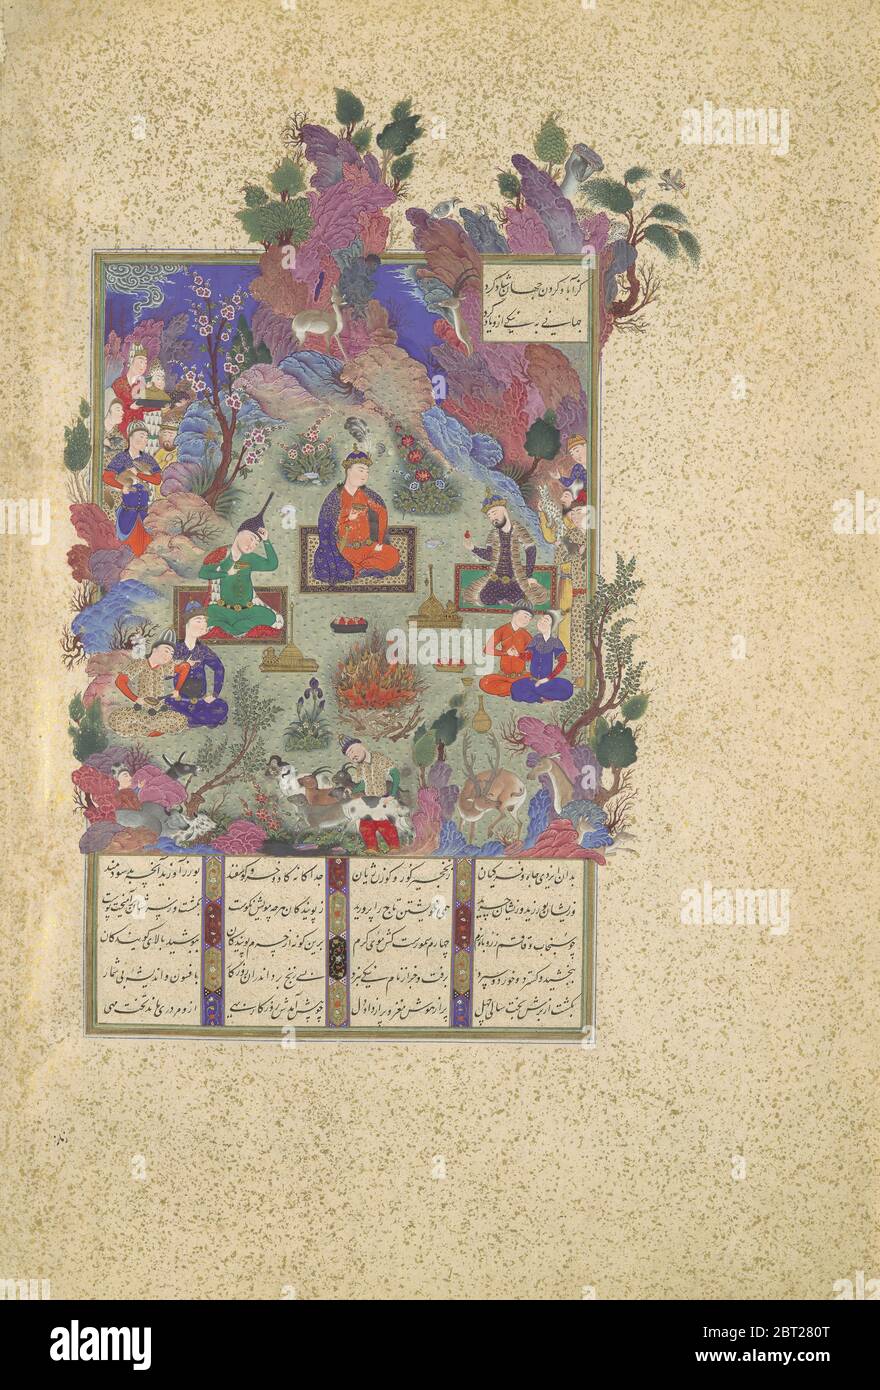 The Feast of Sada, Folio 22v from the Shahnama (Book of Kings) of Shah Tahmasp, ca. 1525. Stock Photo